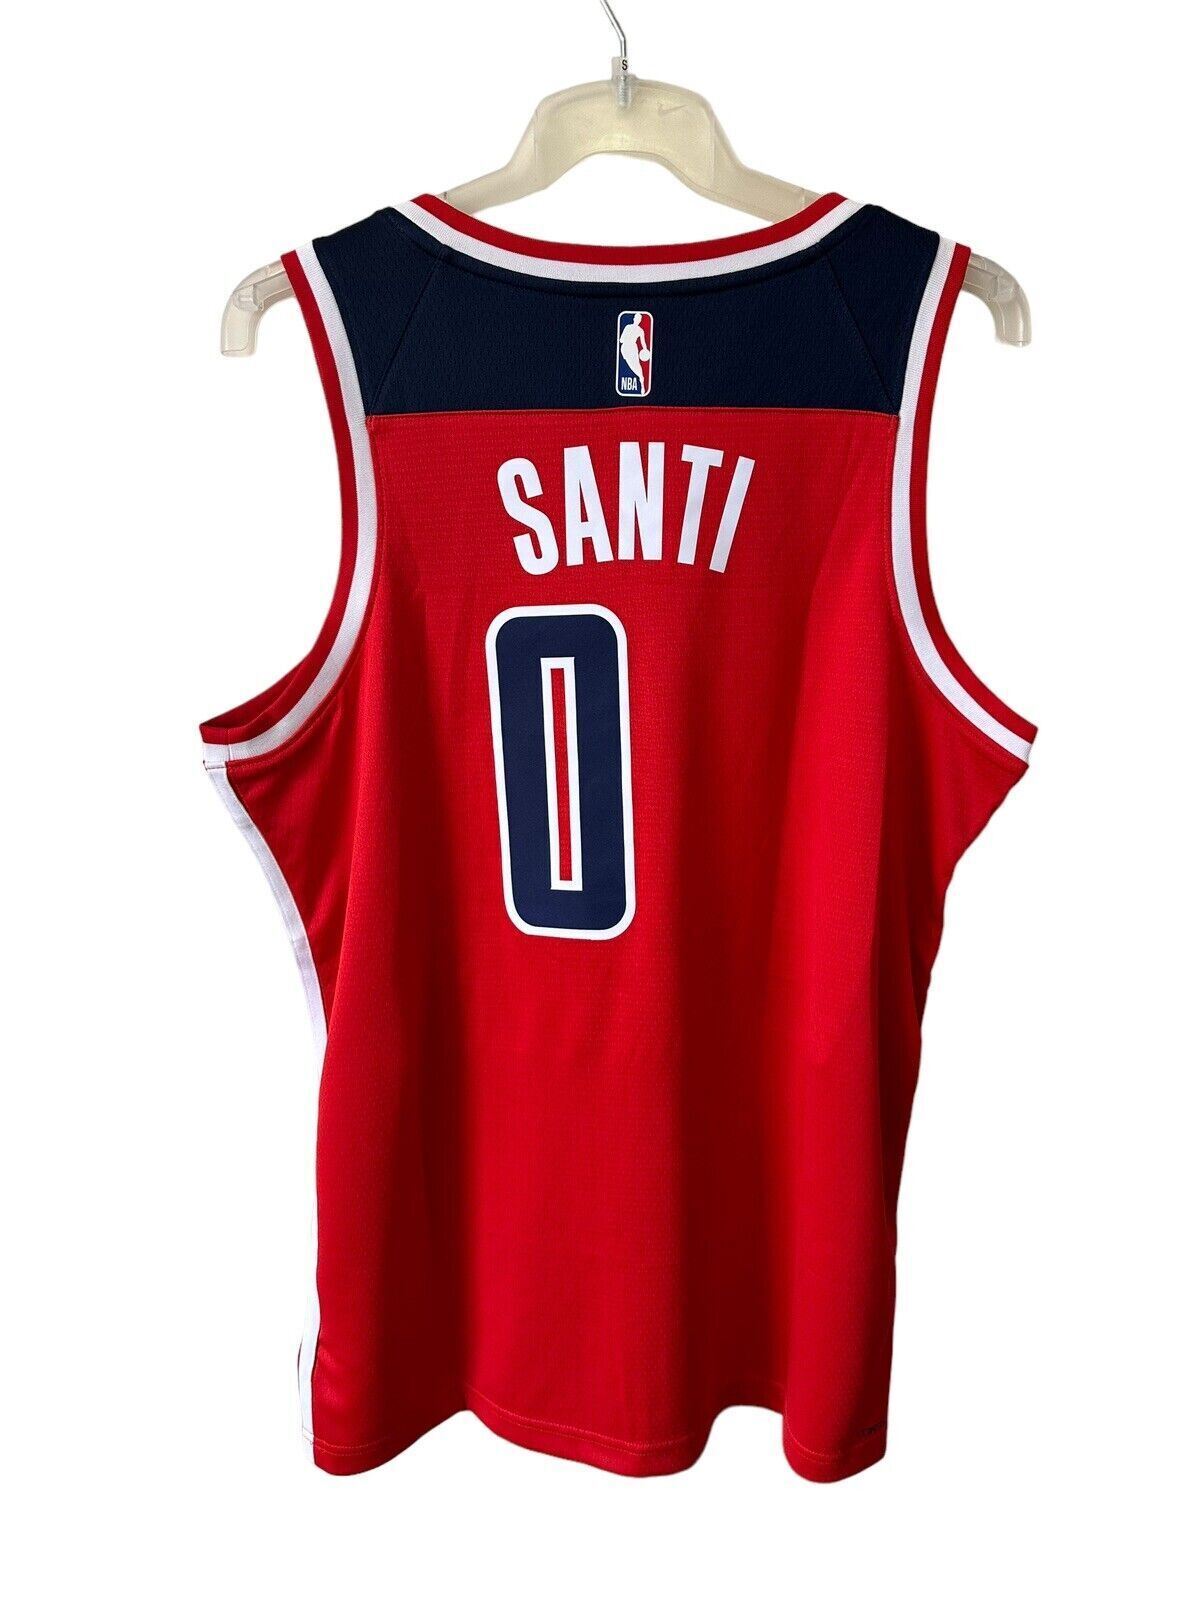 Nike NBA Washington Wizards Swingman Jersey SANTI 00 Basketball Mens Large